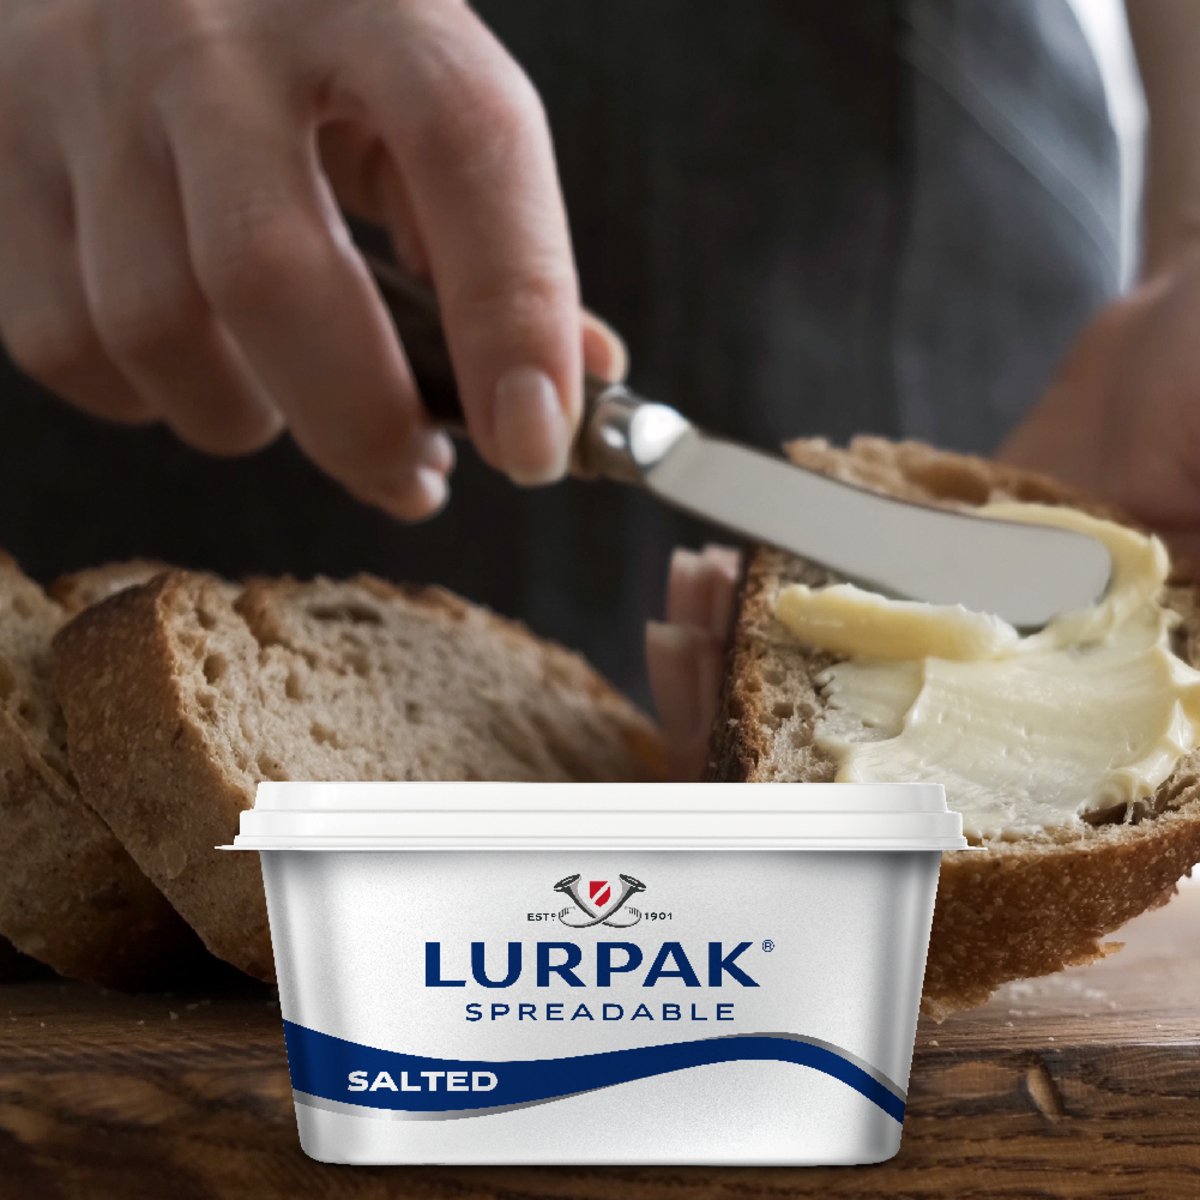 Lurpak Spreadable Butter Salted 500g